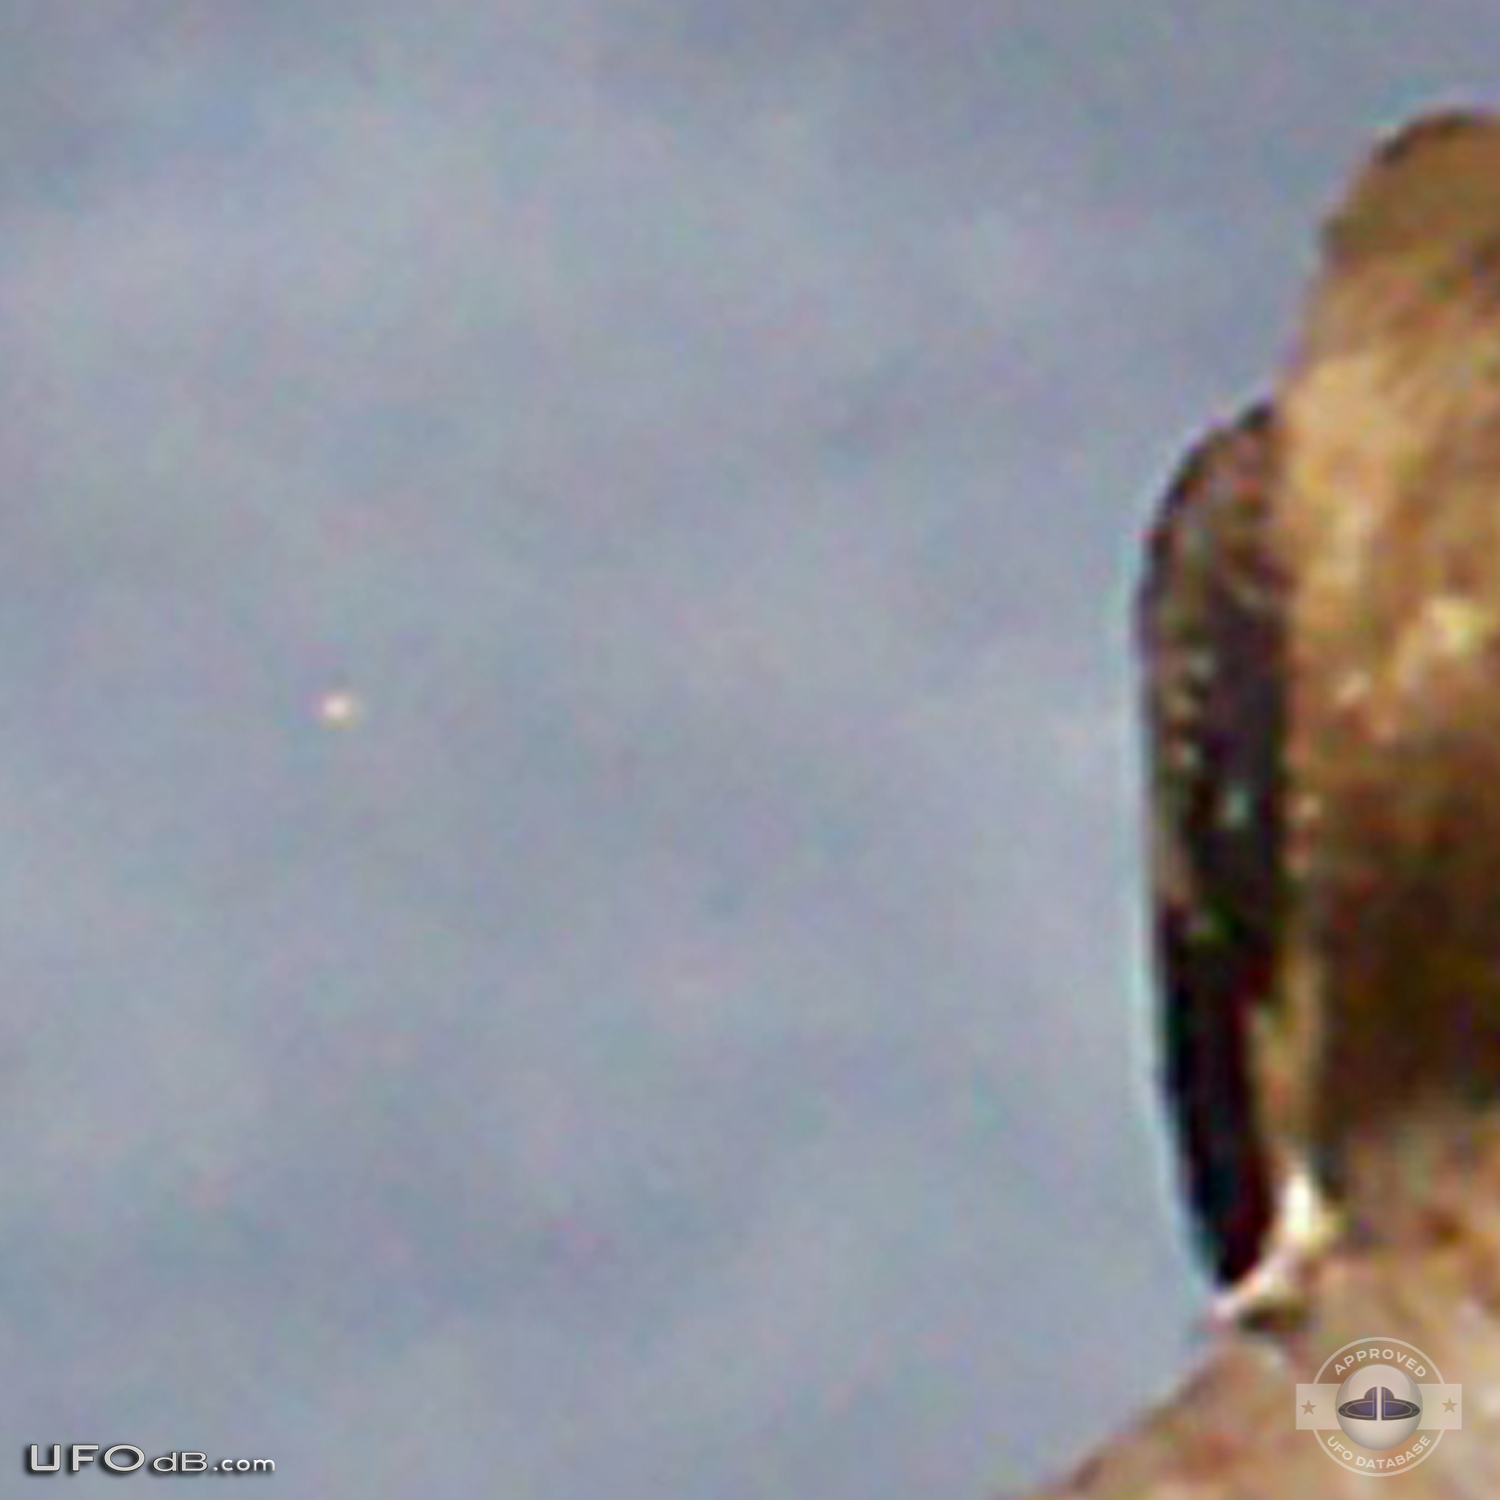 Bird photo captures two UFOs passing near Noosa Heads, Australia 2012 UFO Picture #411-5